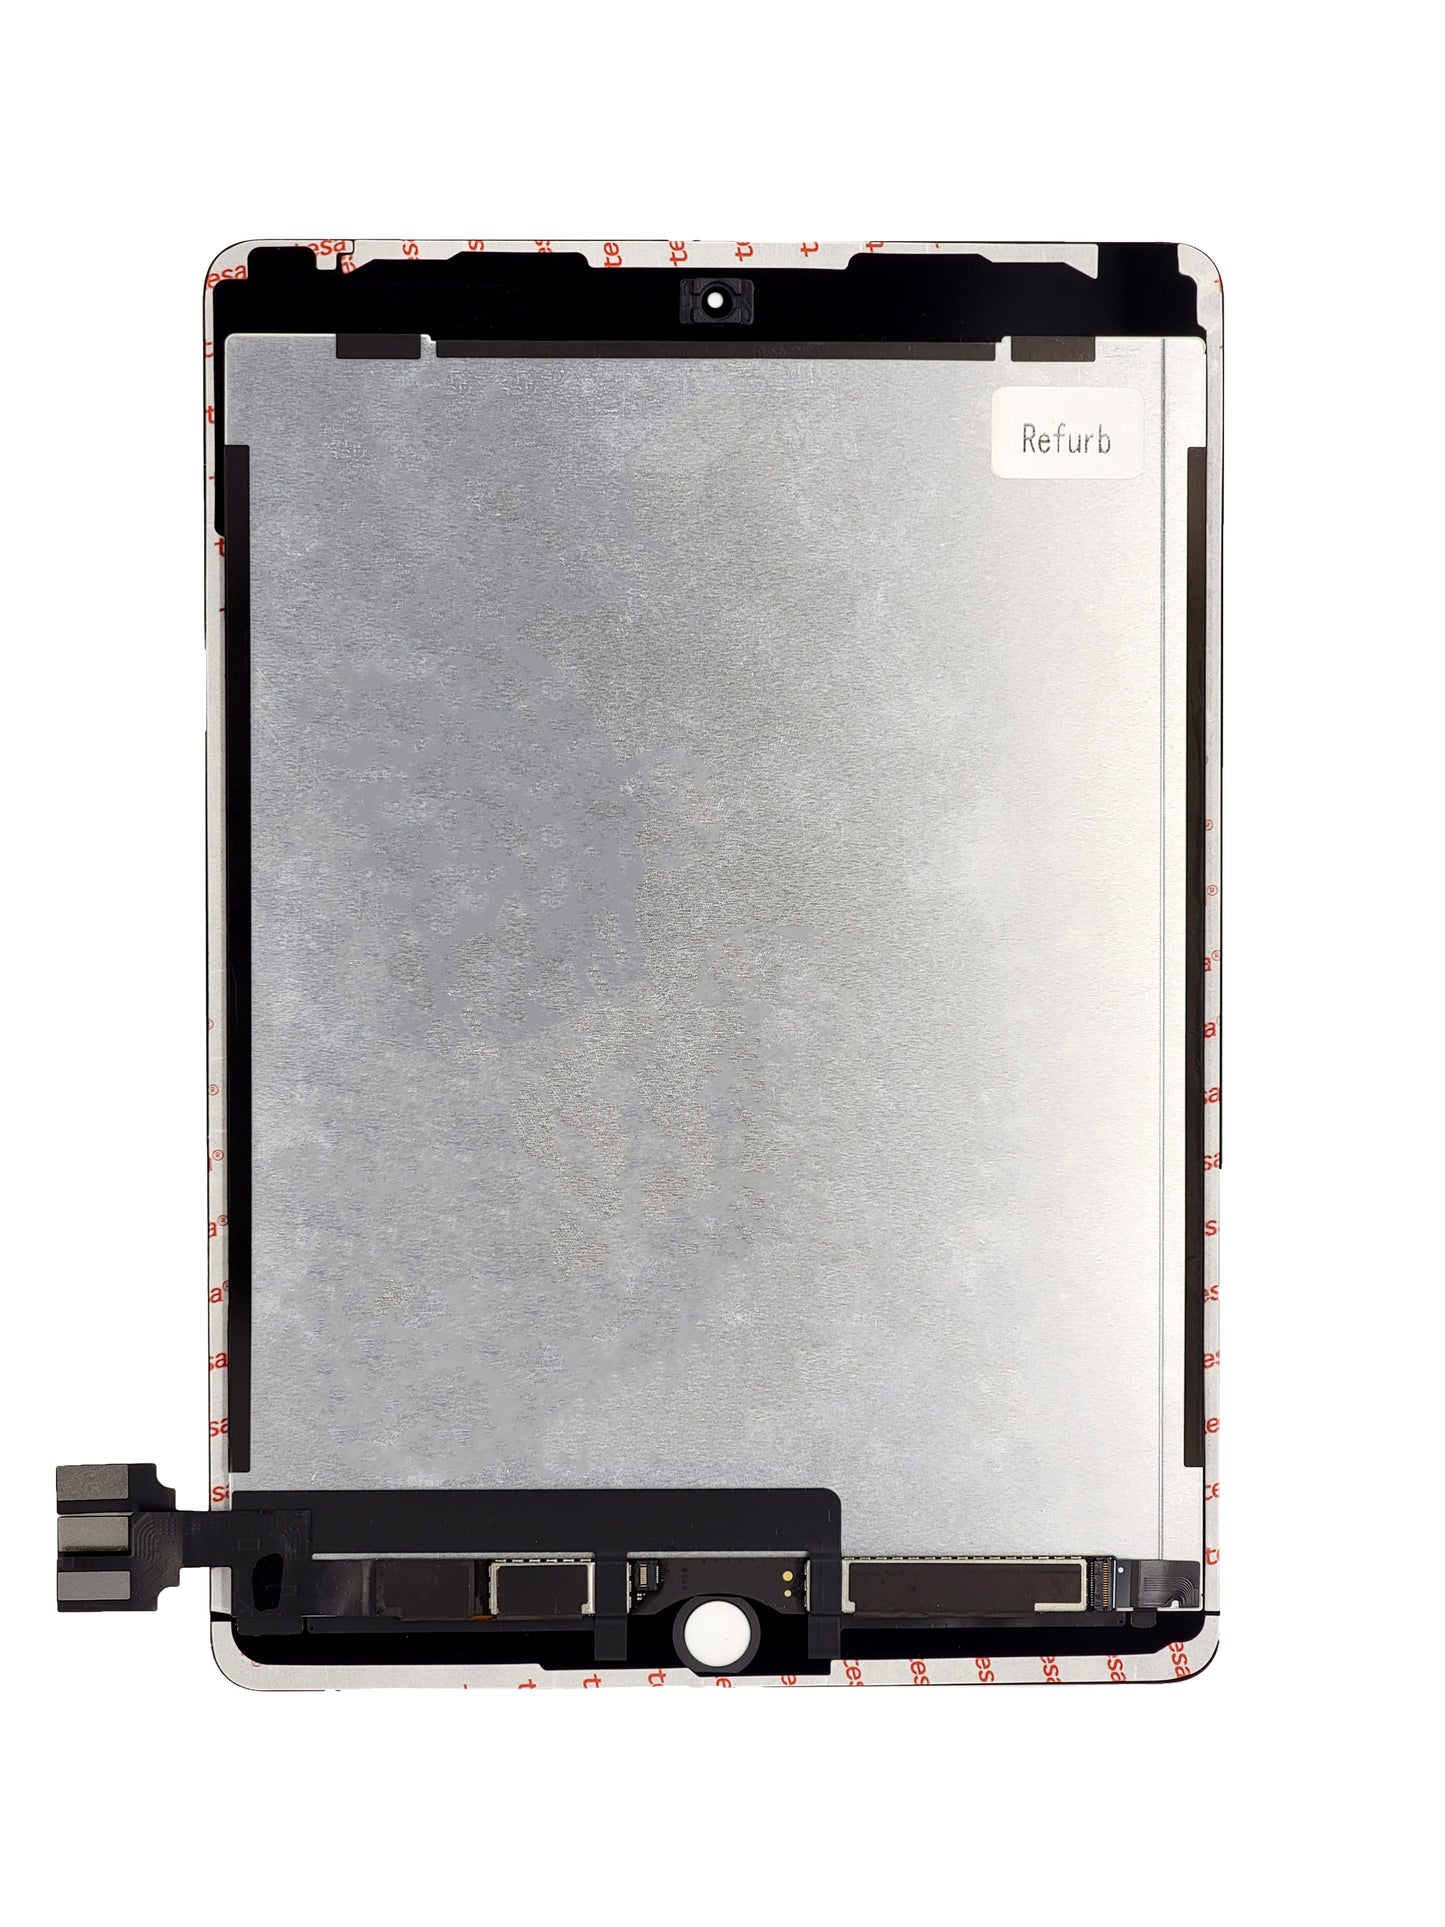 iPad Pro 9.7 Screen Assembly (Refurbished) (Black)